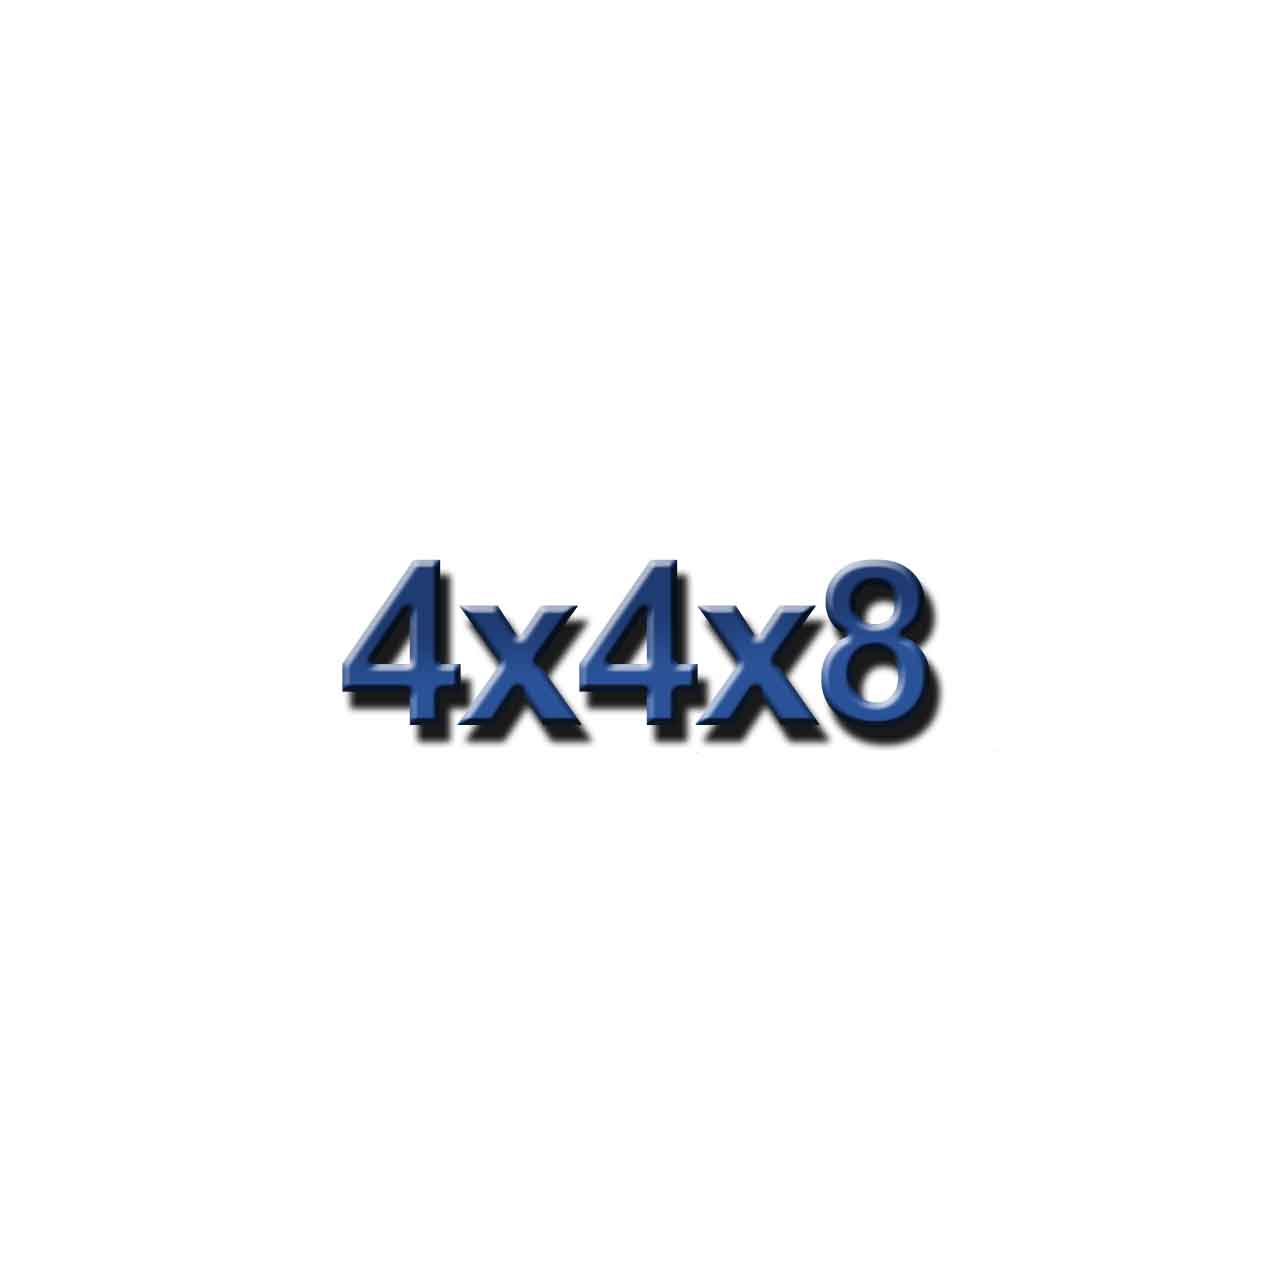 4x4x8